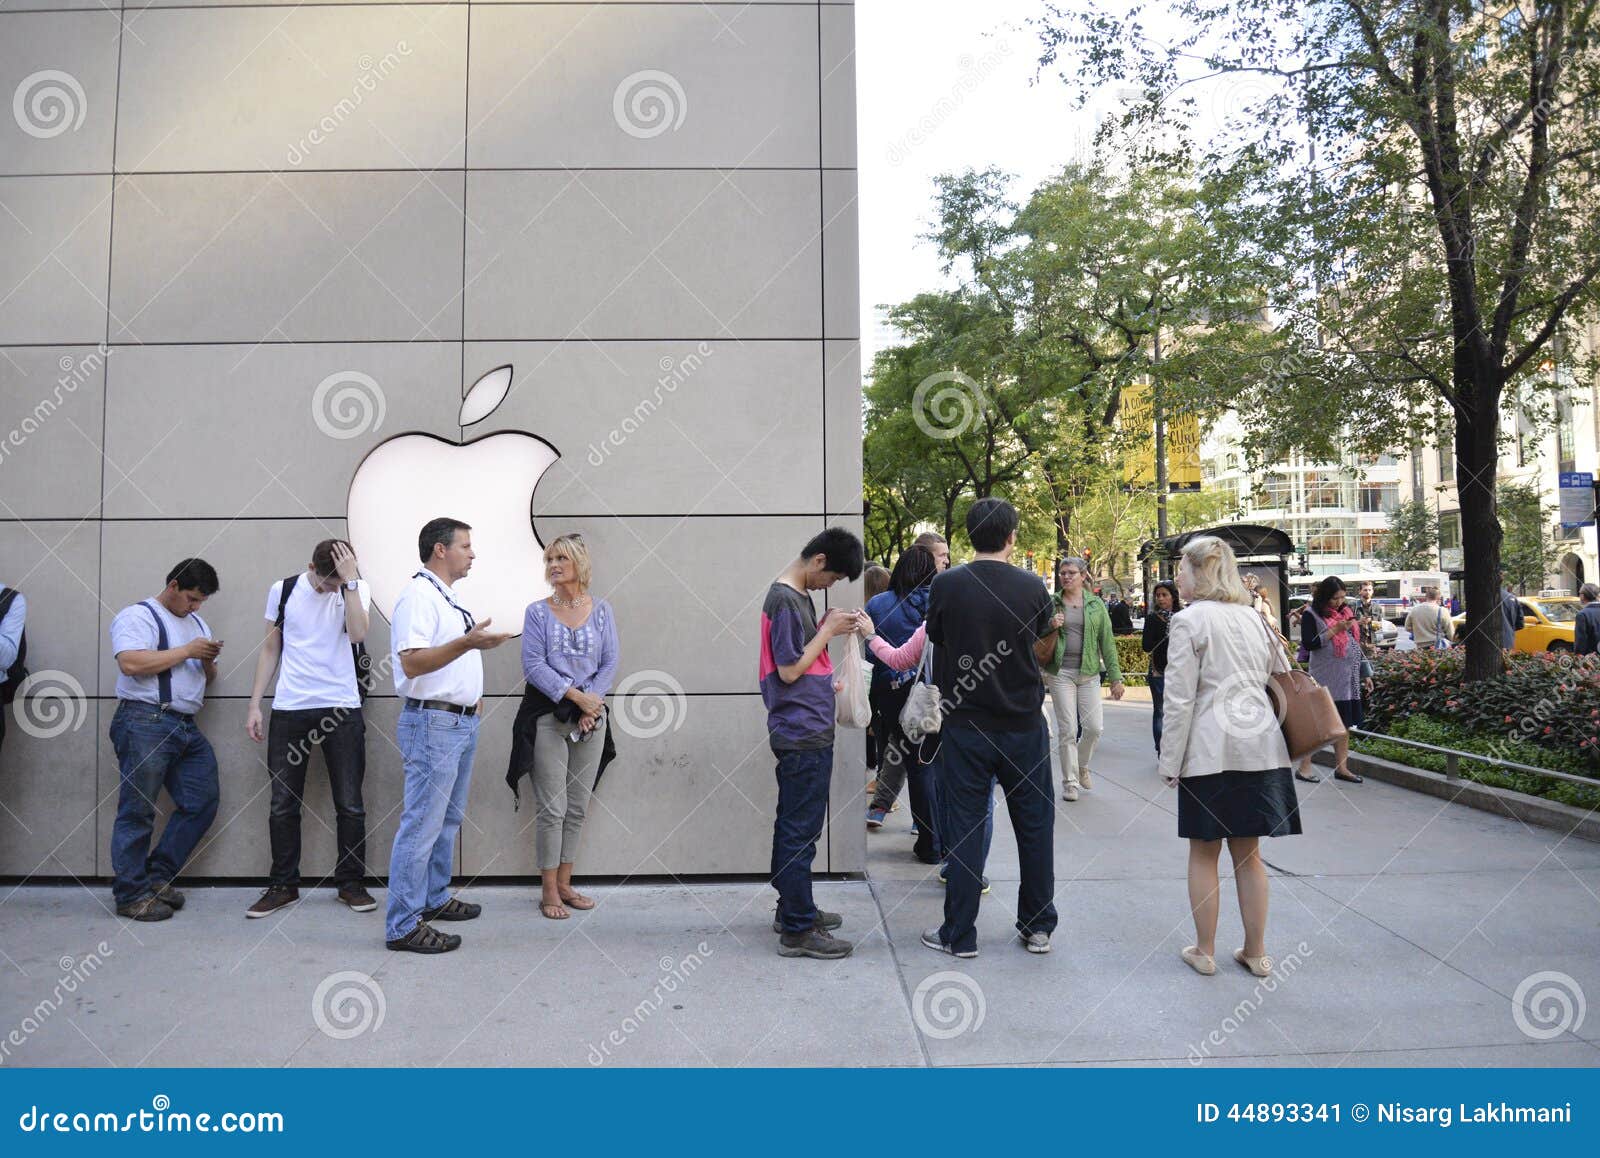 Chicago Apple Store 6